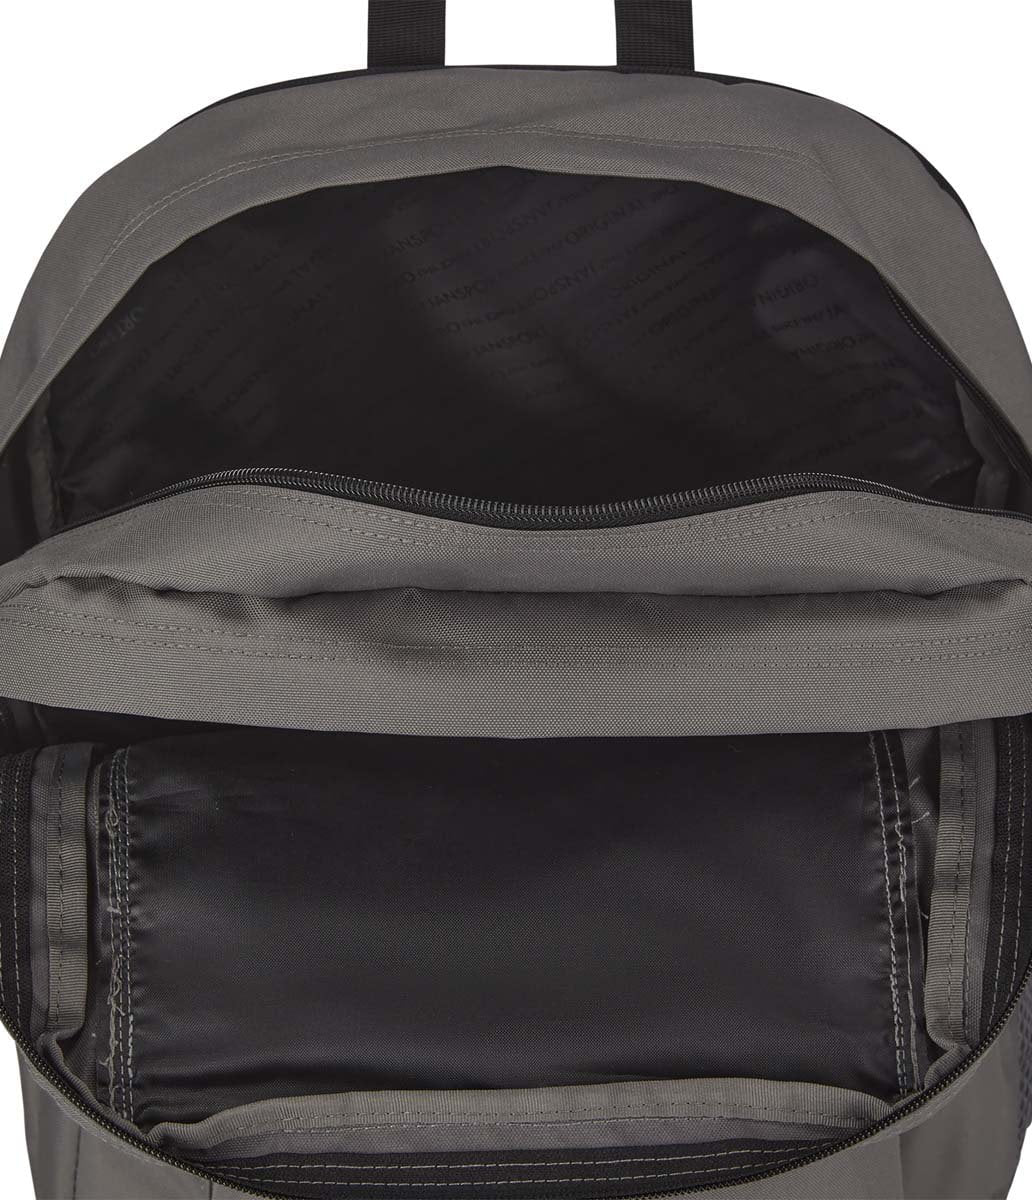 JanSport Main Campus Backpack - Graphite Grey